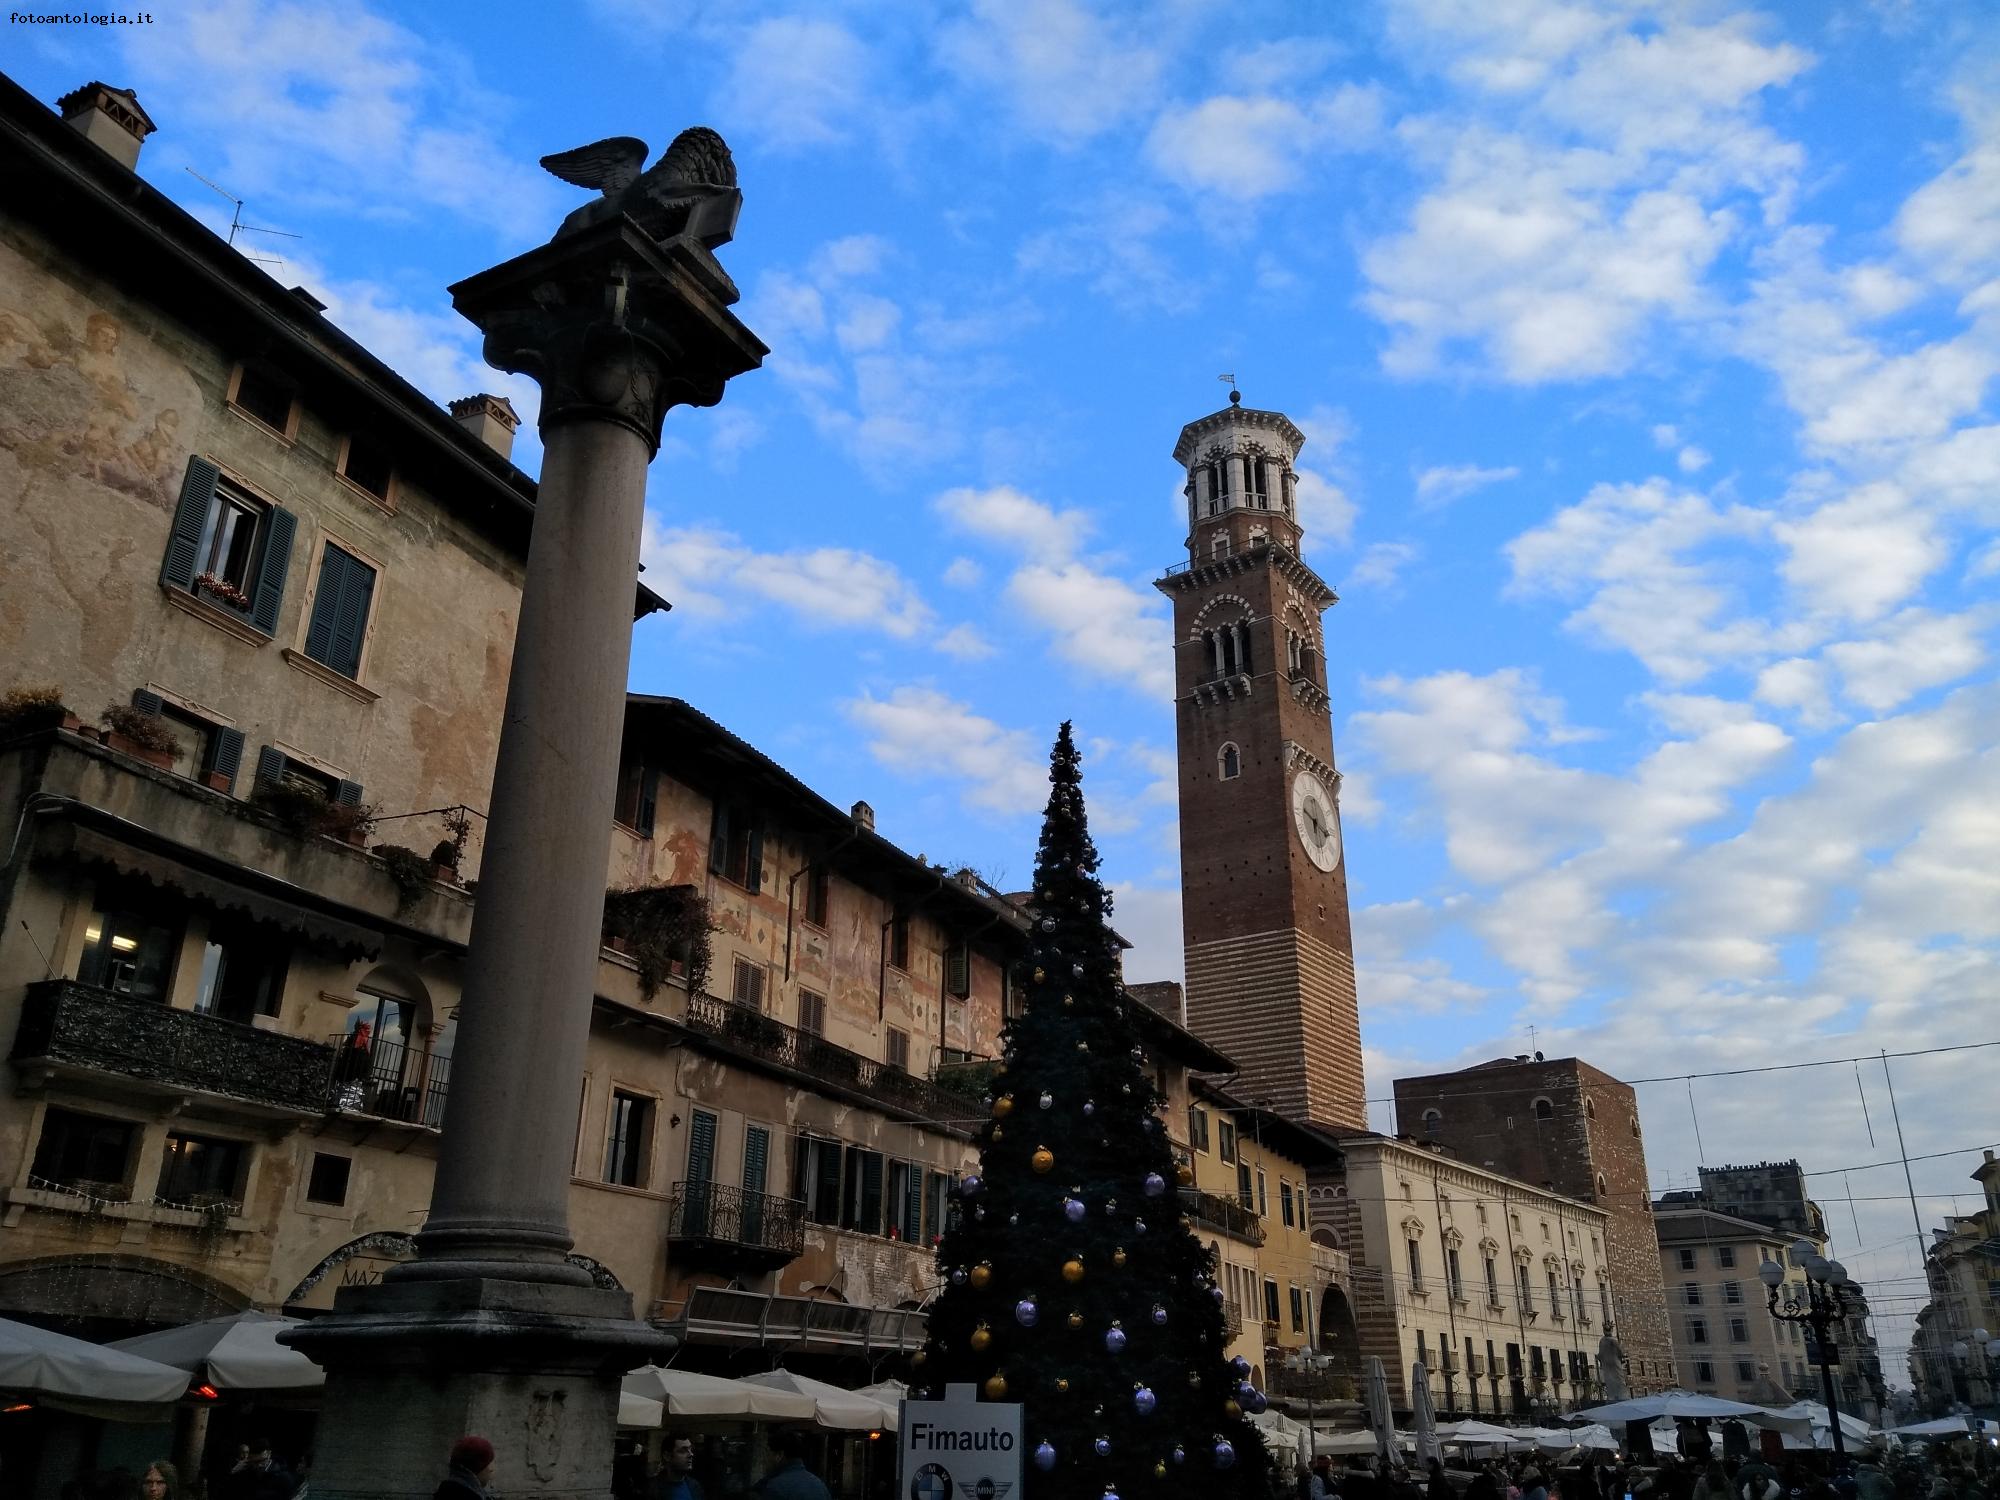 Verona - Piazza delle Erbe